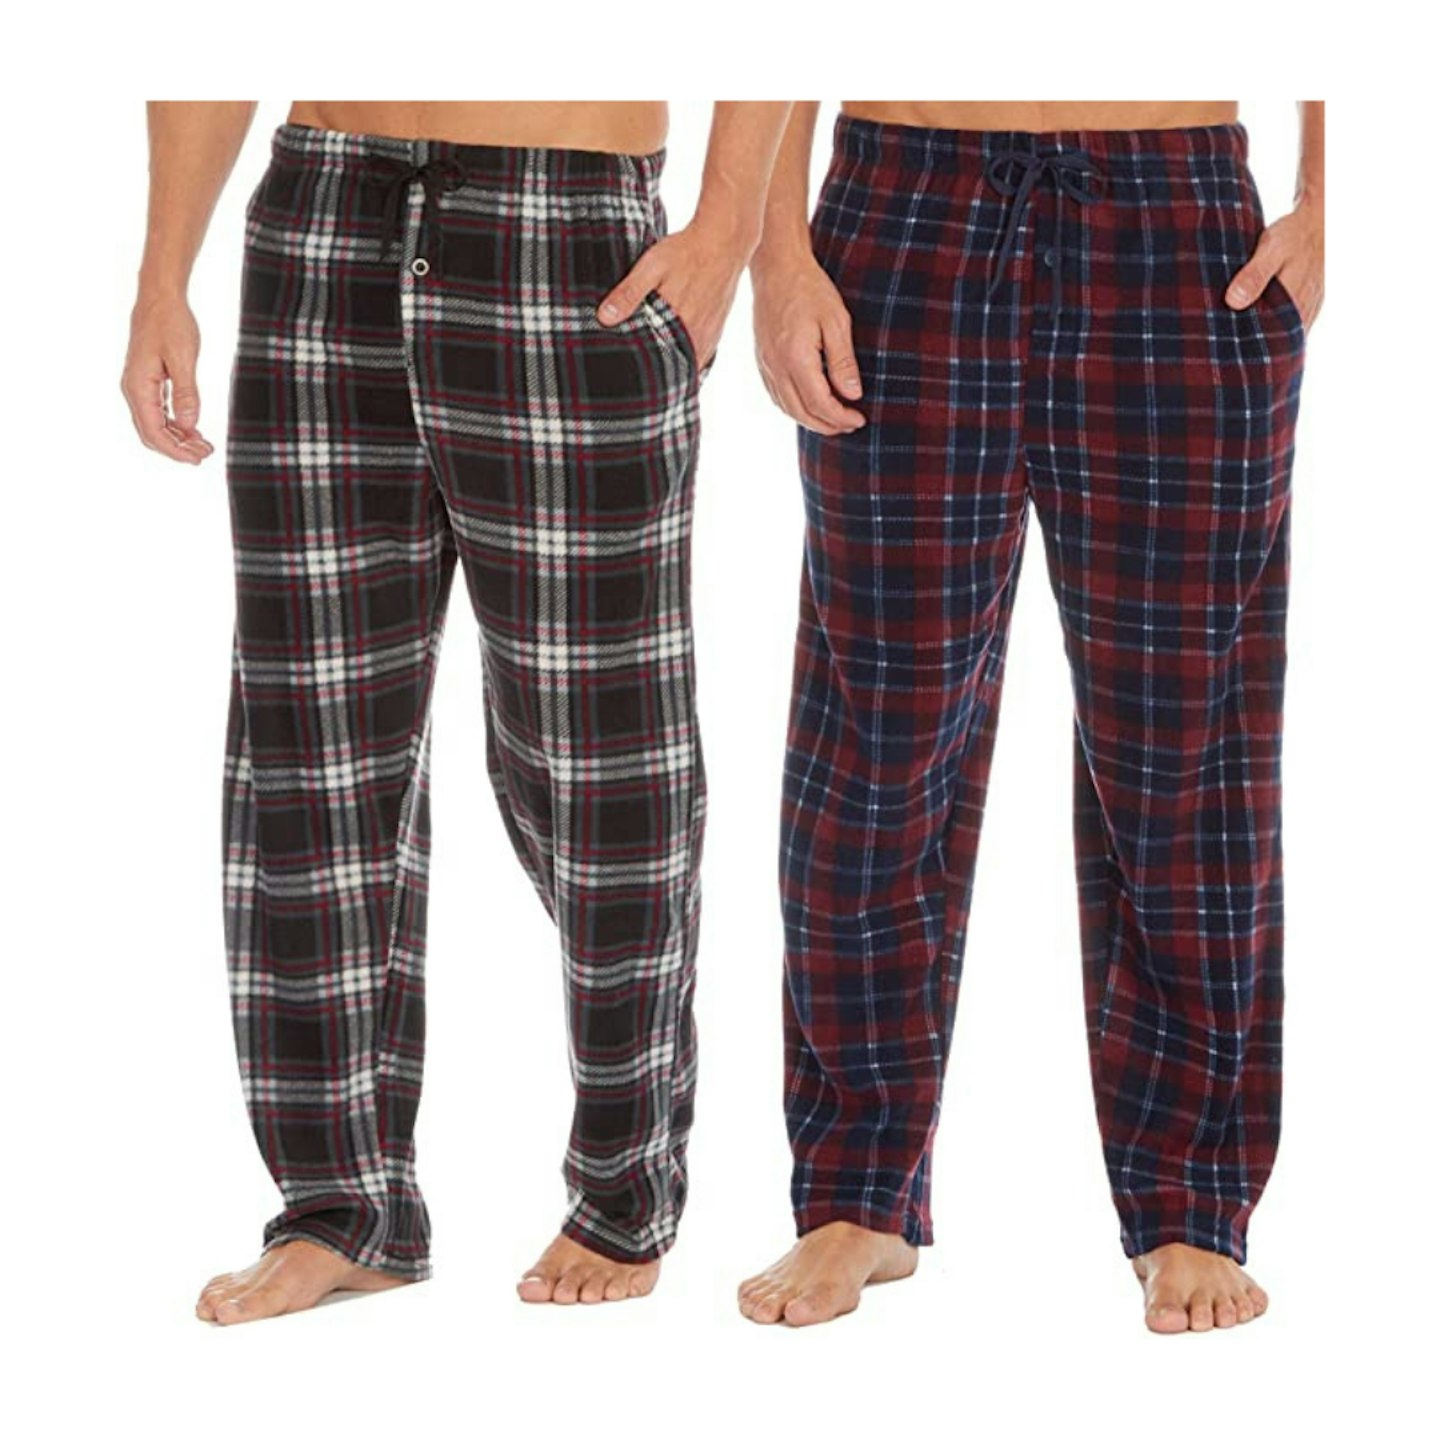 NSIGNIA 2 Pack Mens Fleece Check Pyjamas Lounge Pants Bottoms